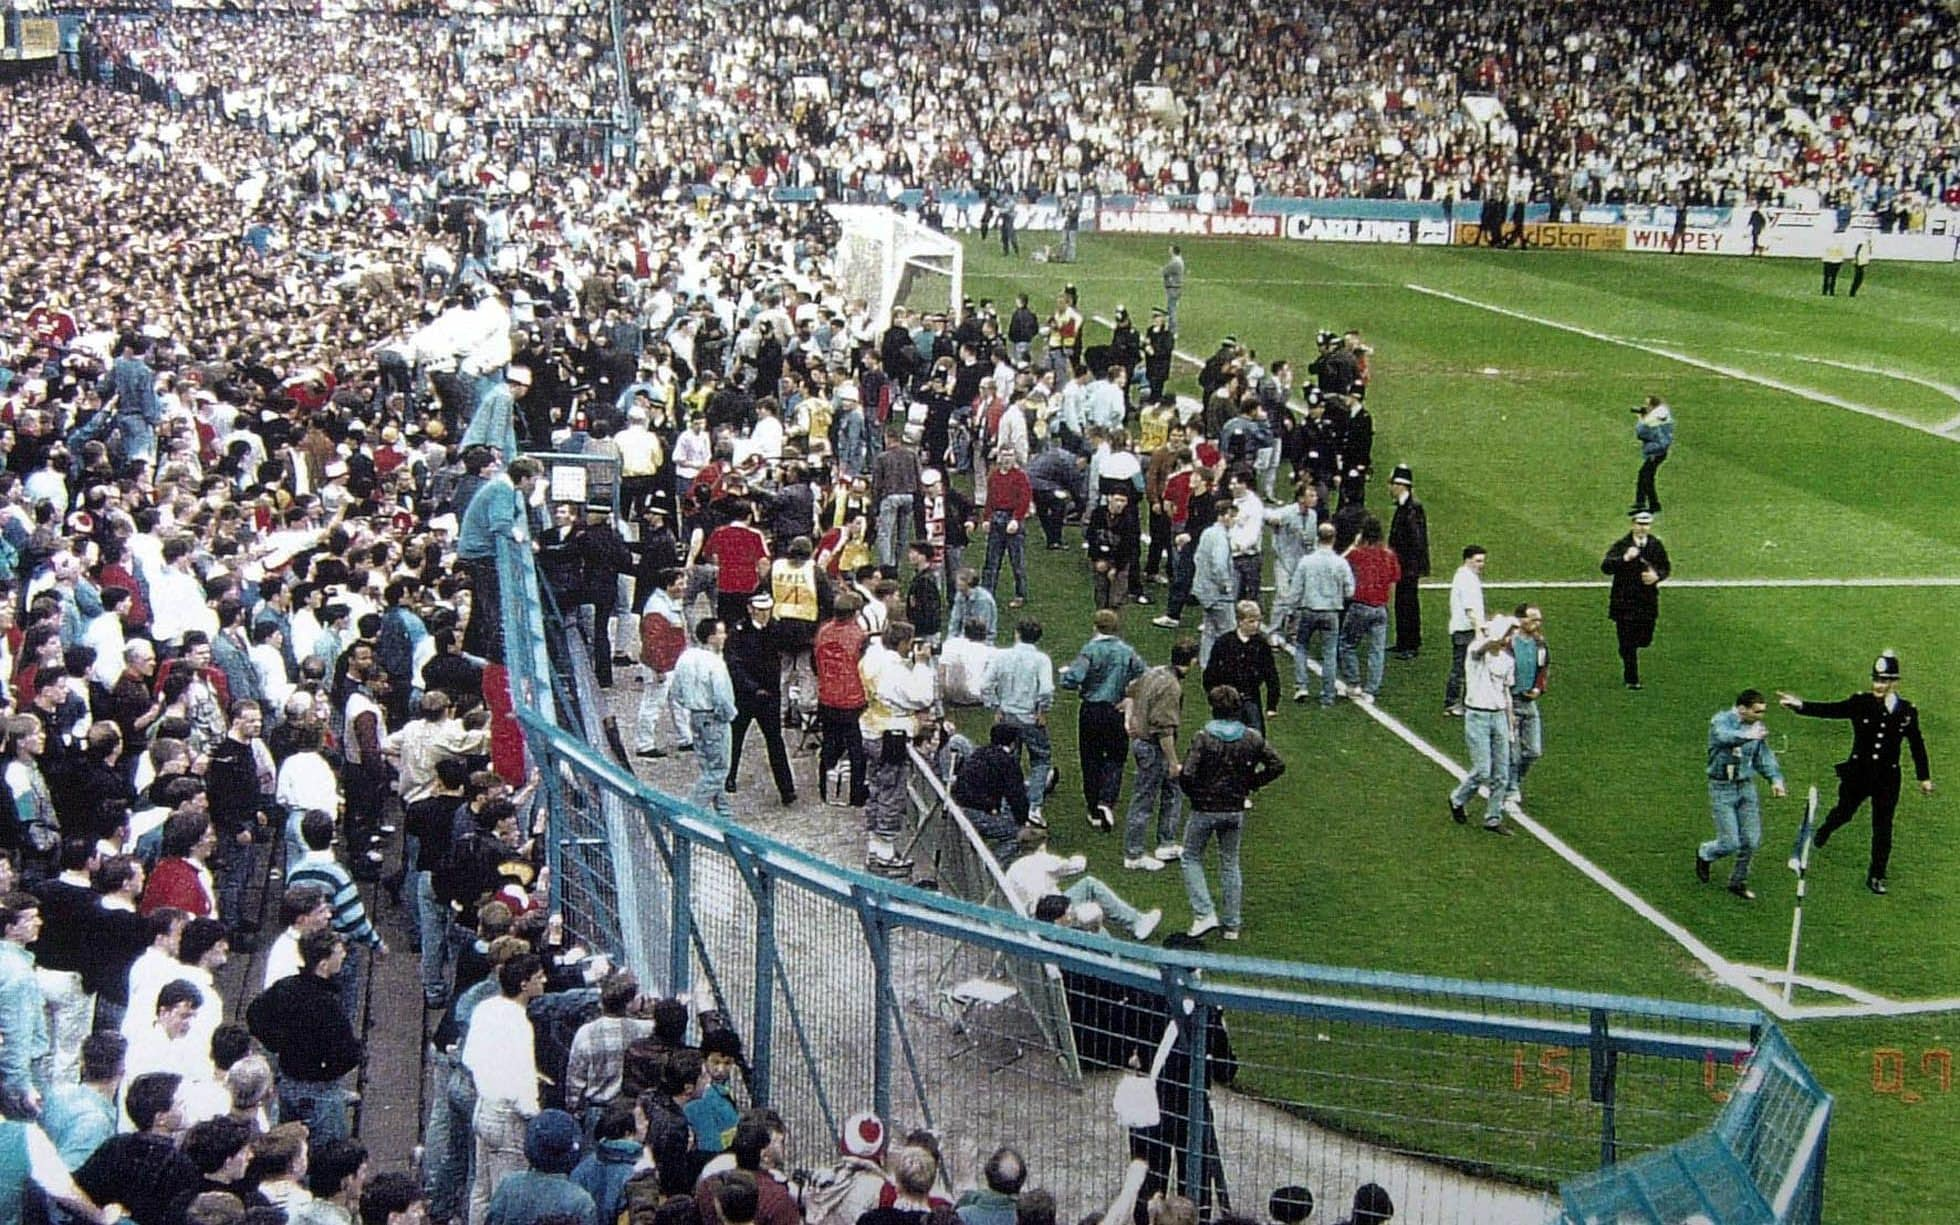 15 апреля 2002. Стадион Хиллсборо в Шеффилде, 1989. Стадион Хиллсборо в Шеффилде, 1989 год, Англия. Стадион Хиллсборо в Шеффилде 1989 год Англия давка. 15 Апреля 1989 года на стадионе Хиллсборо в Англии.